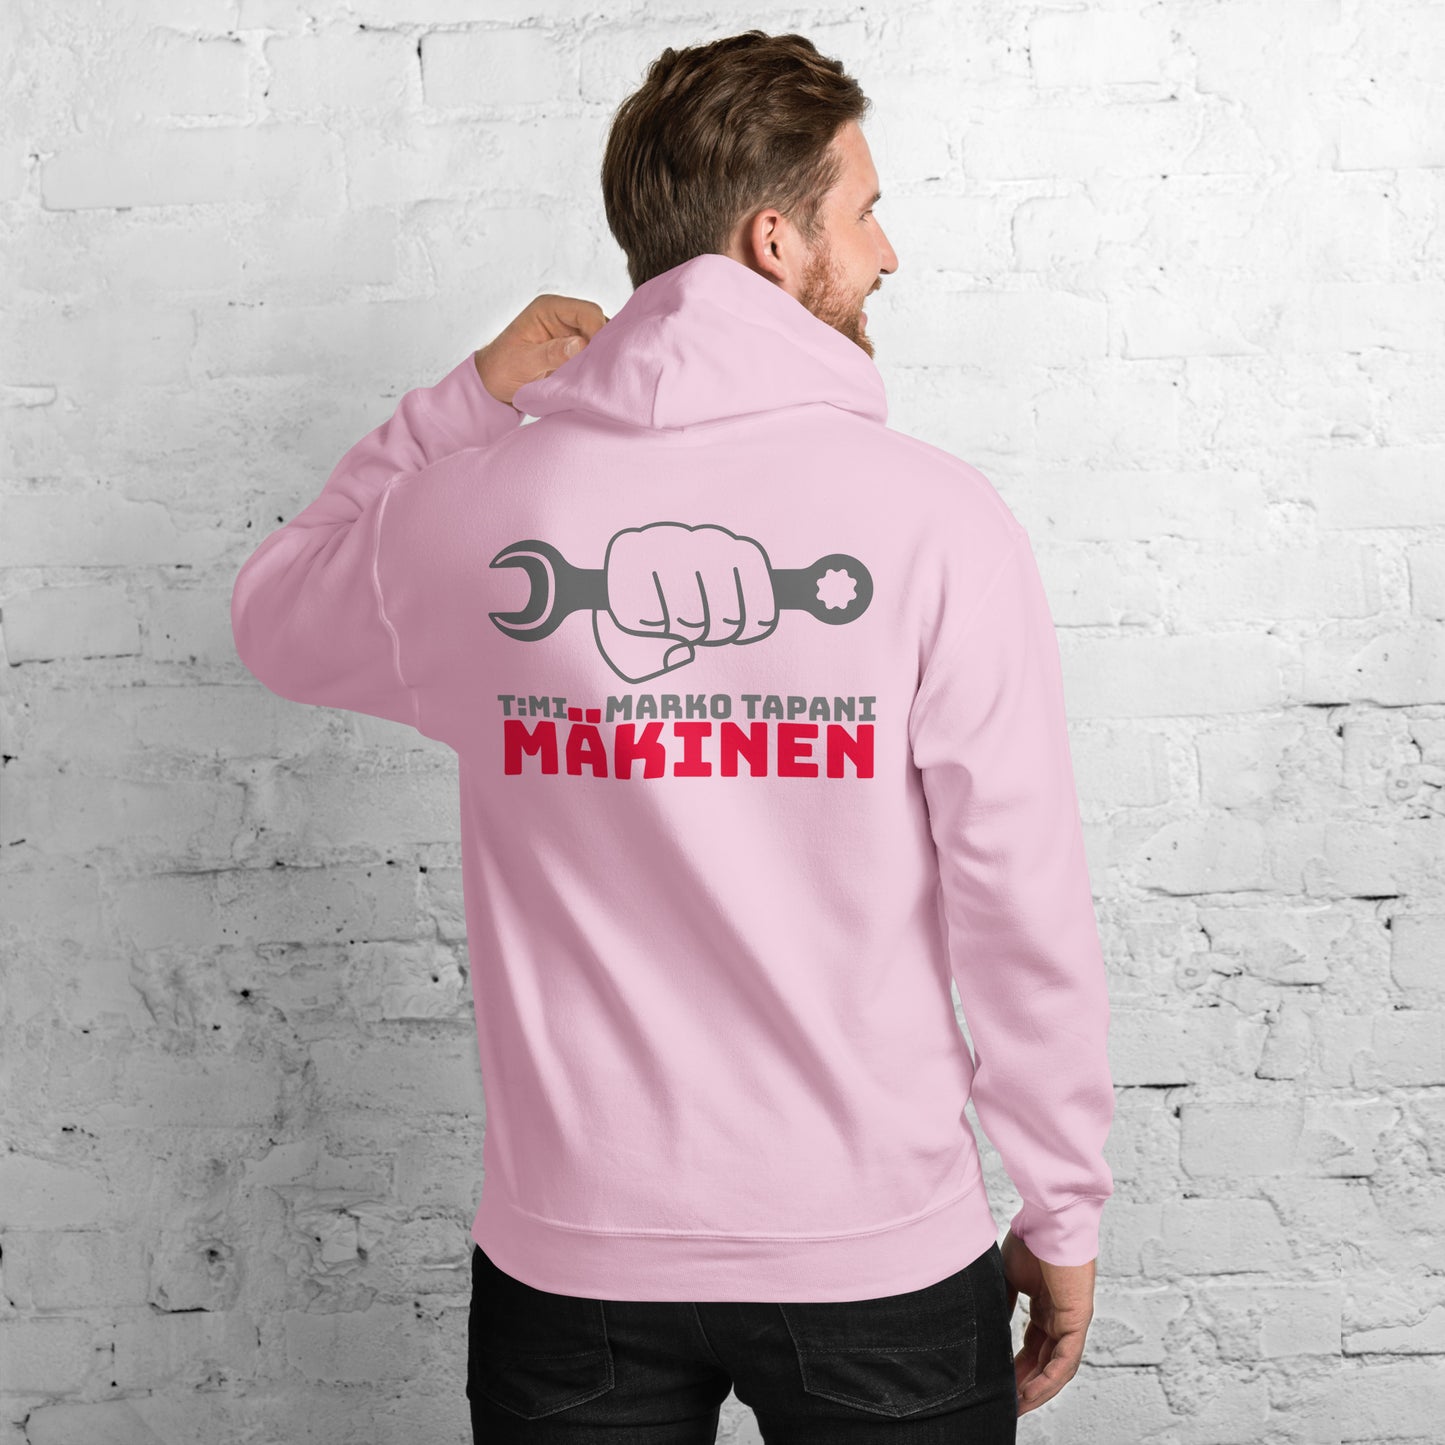 "T:mi Marko Tapani Mäkinen" hoodie